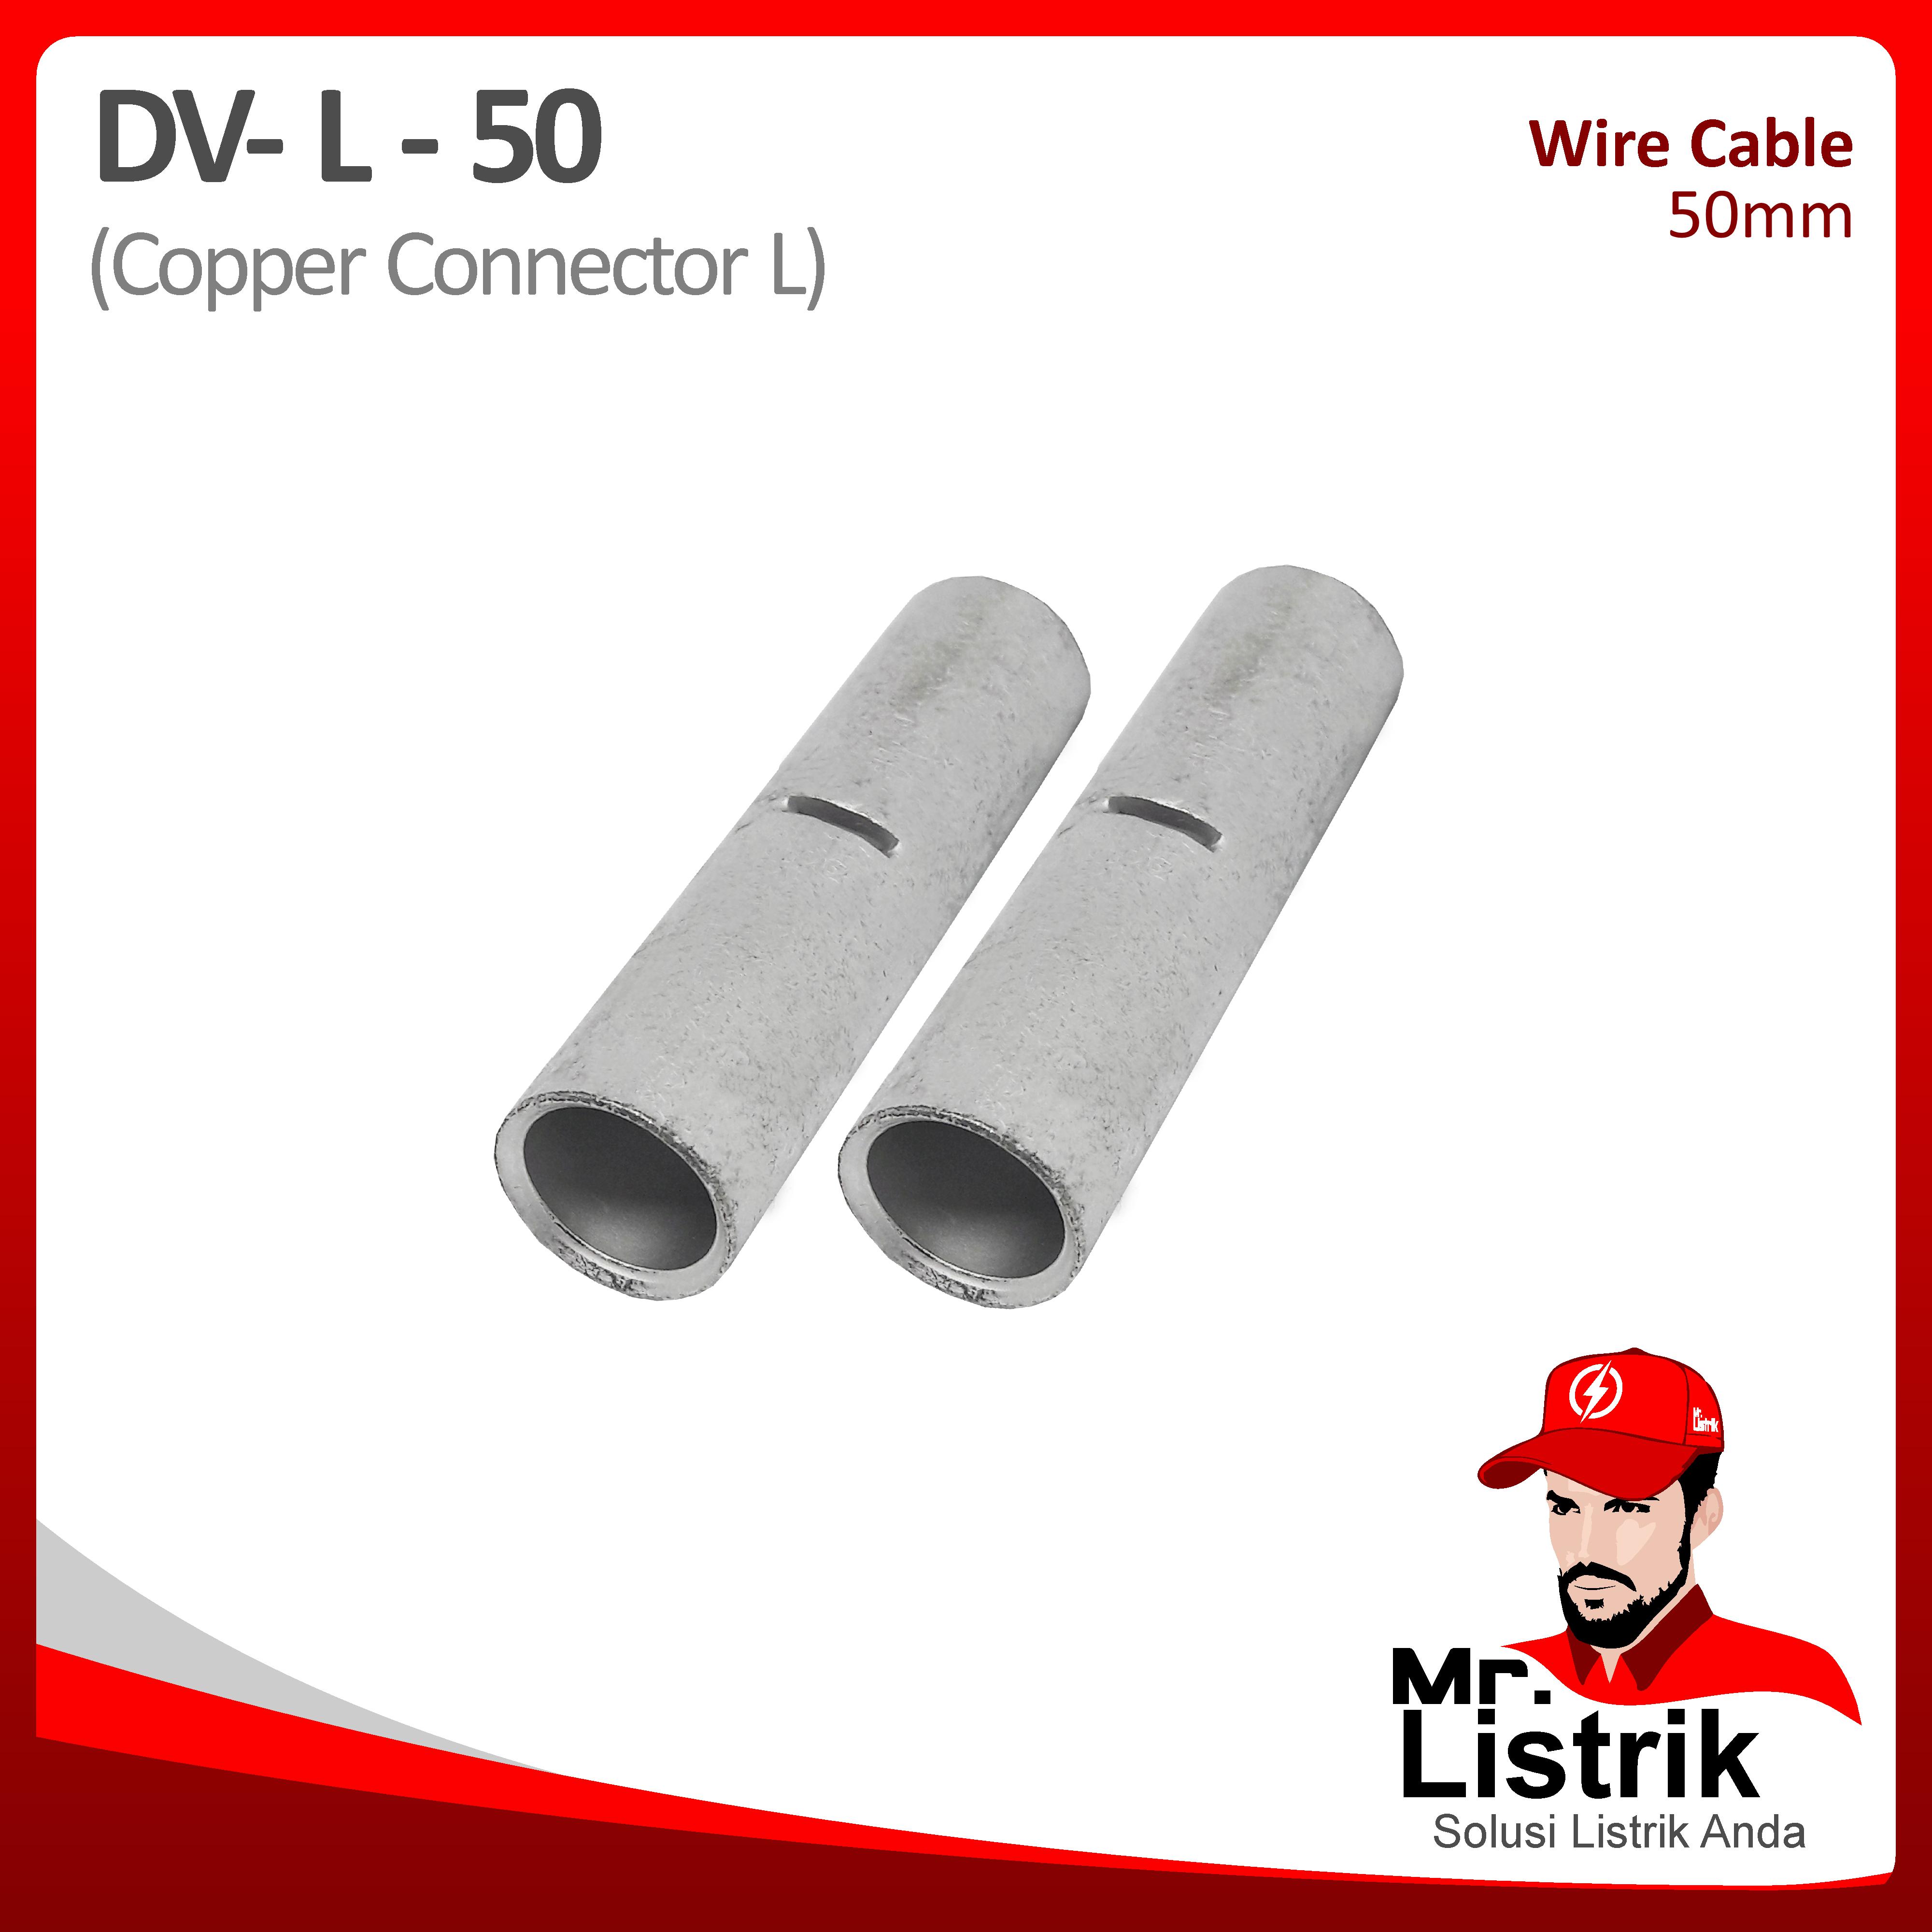 Copper Connector-L 50mm DV L-50